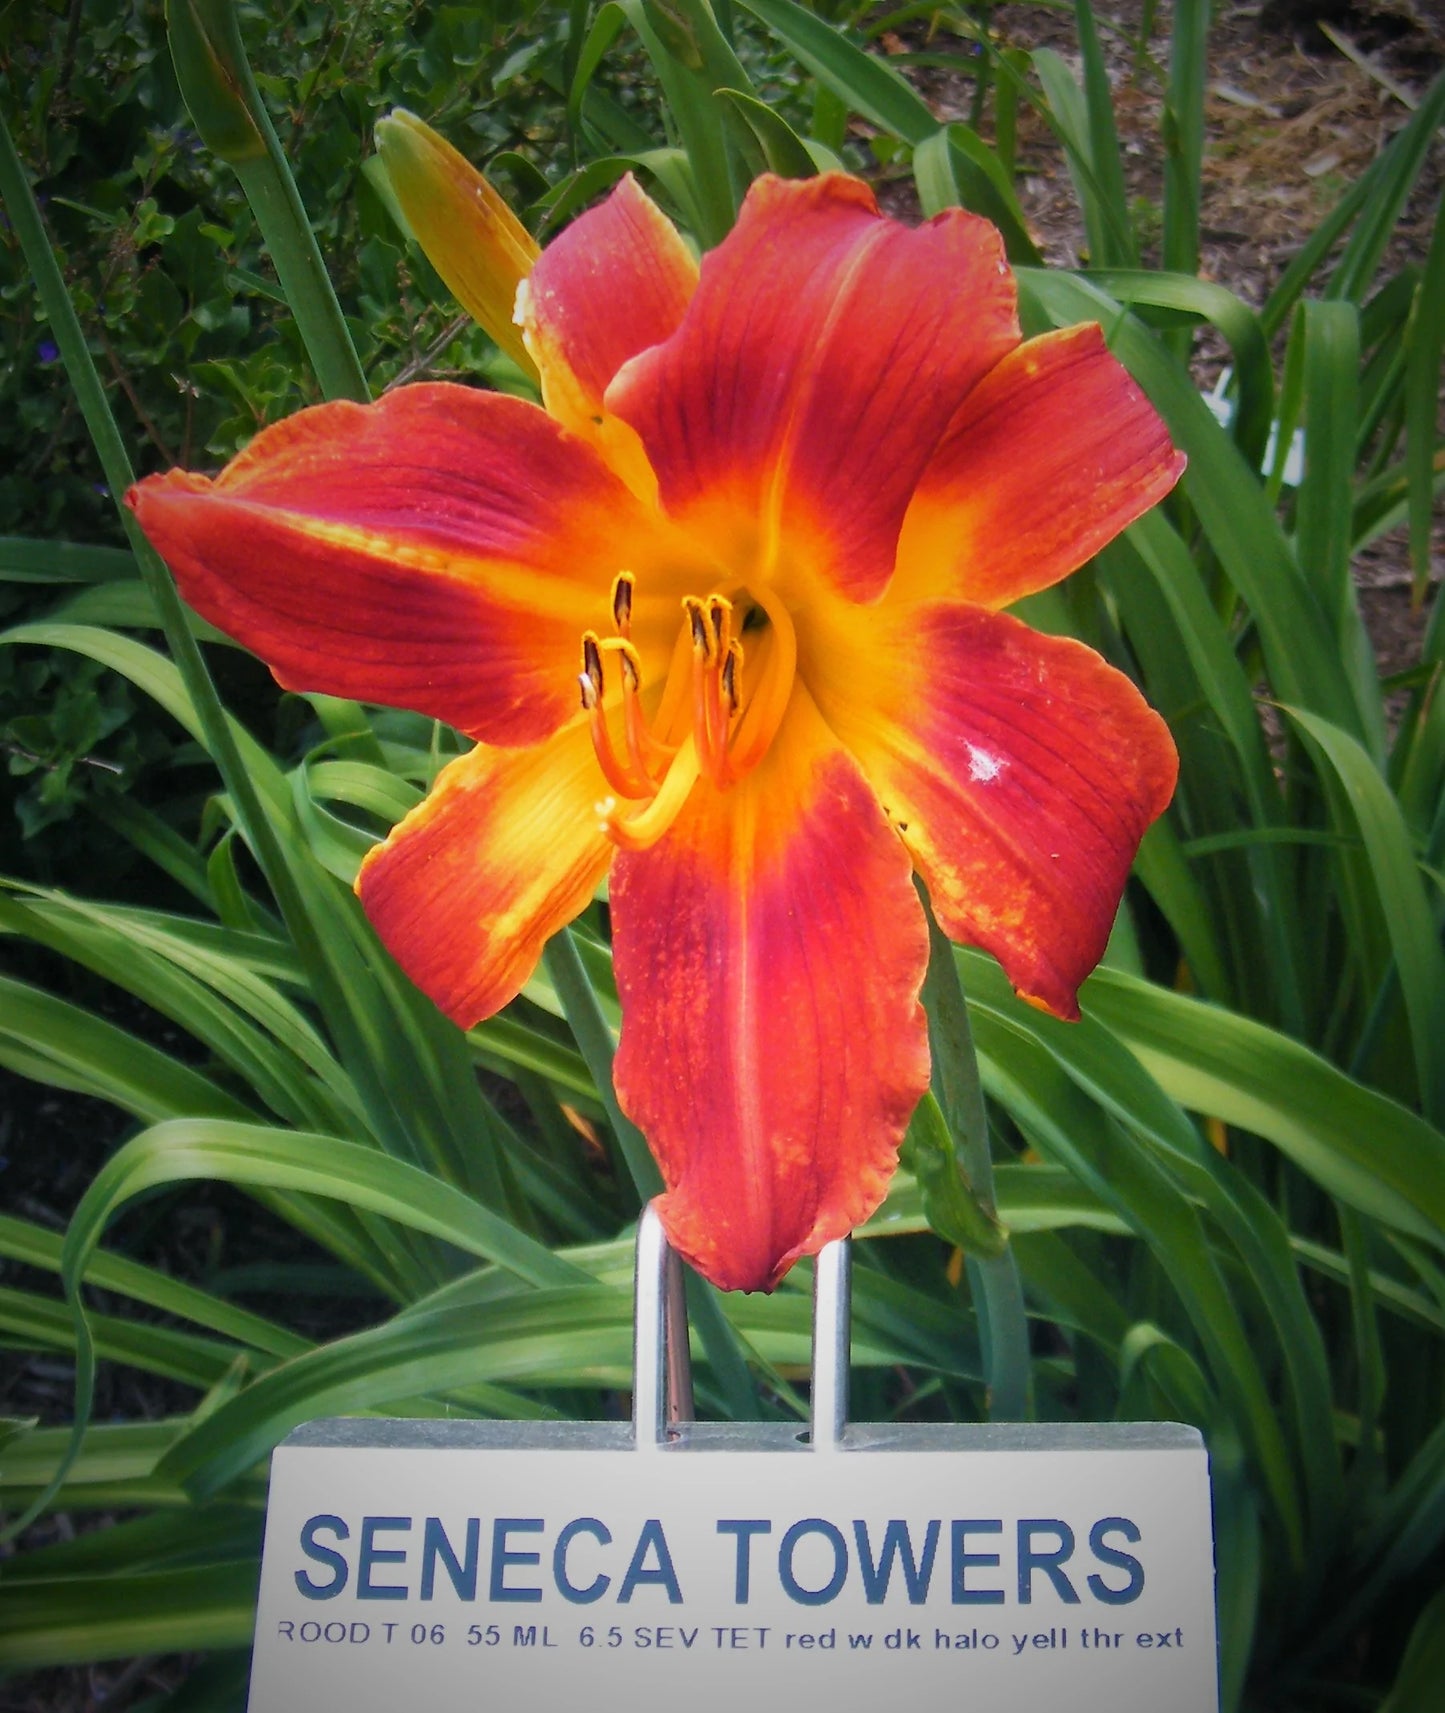 SENECA TOWERS